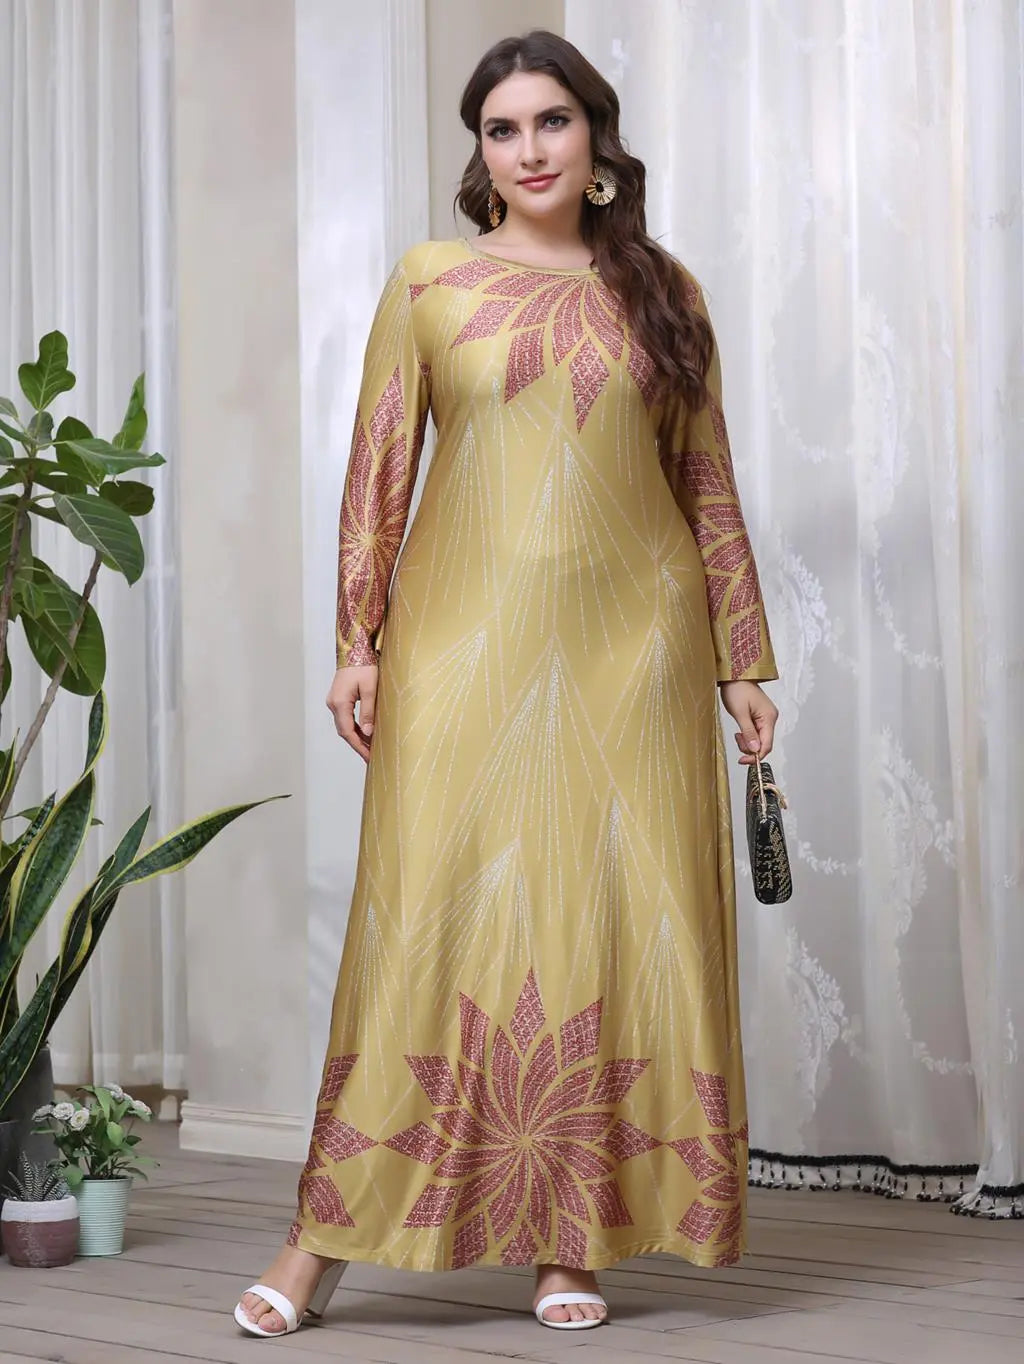 Winter Dress Woman Long Sleeve Retro Floral Printing Vintage Luxury Abaya Dubai Muslim Dress-dresses-Top Super Deals-Free Item Online